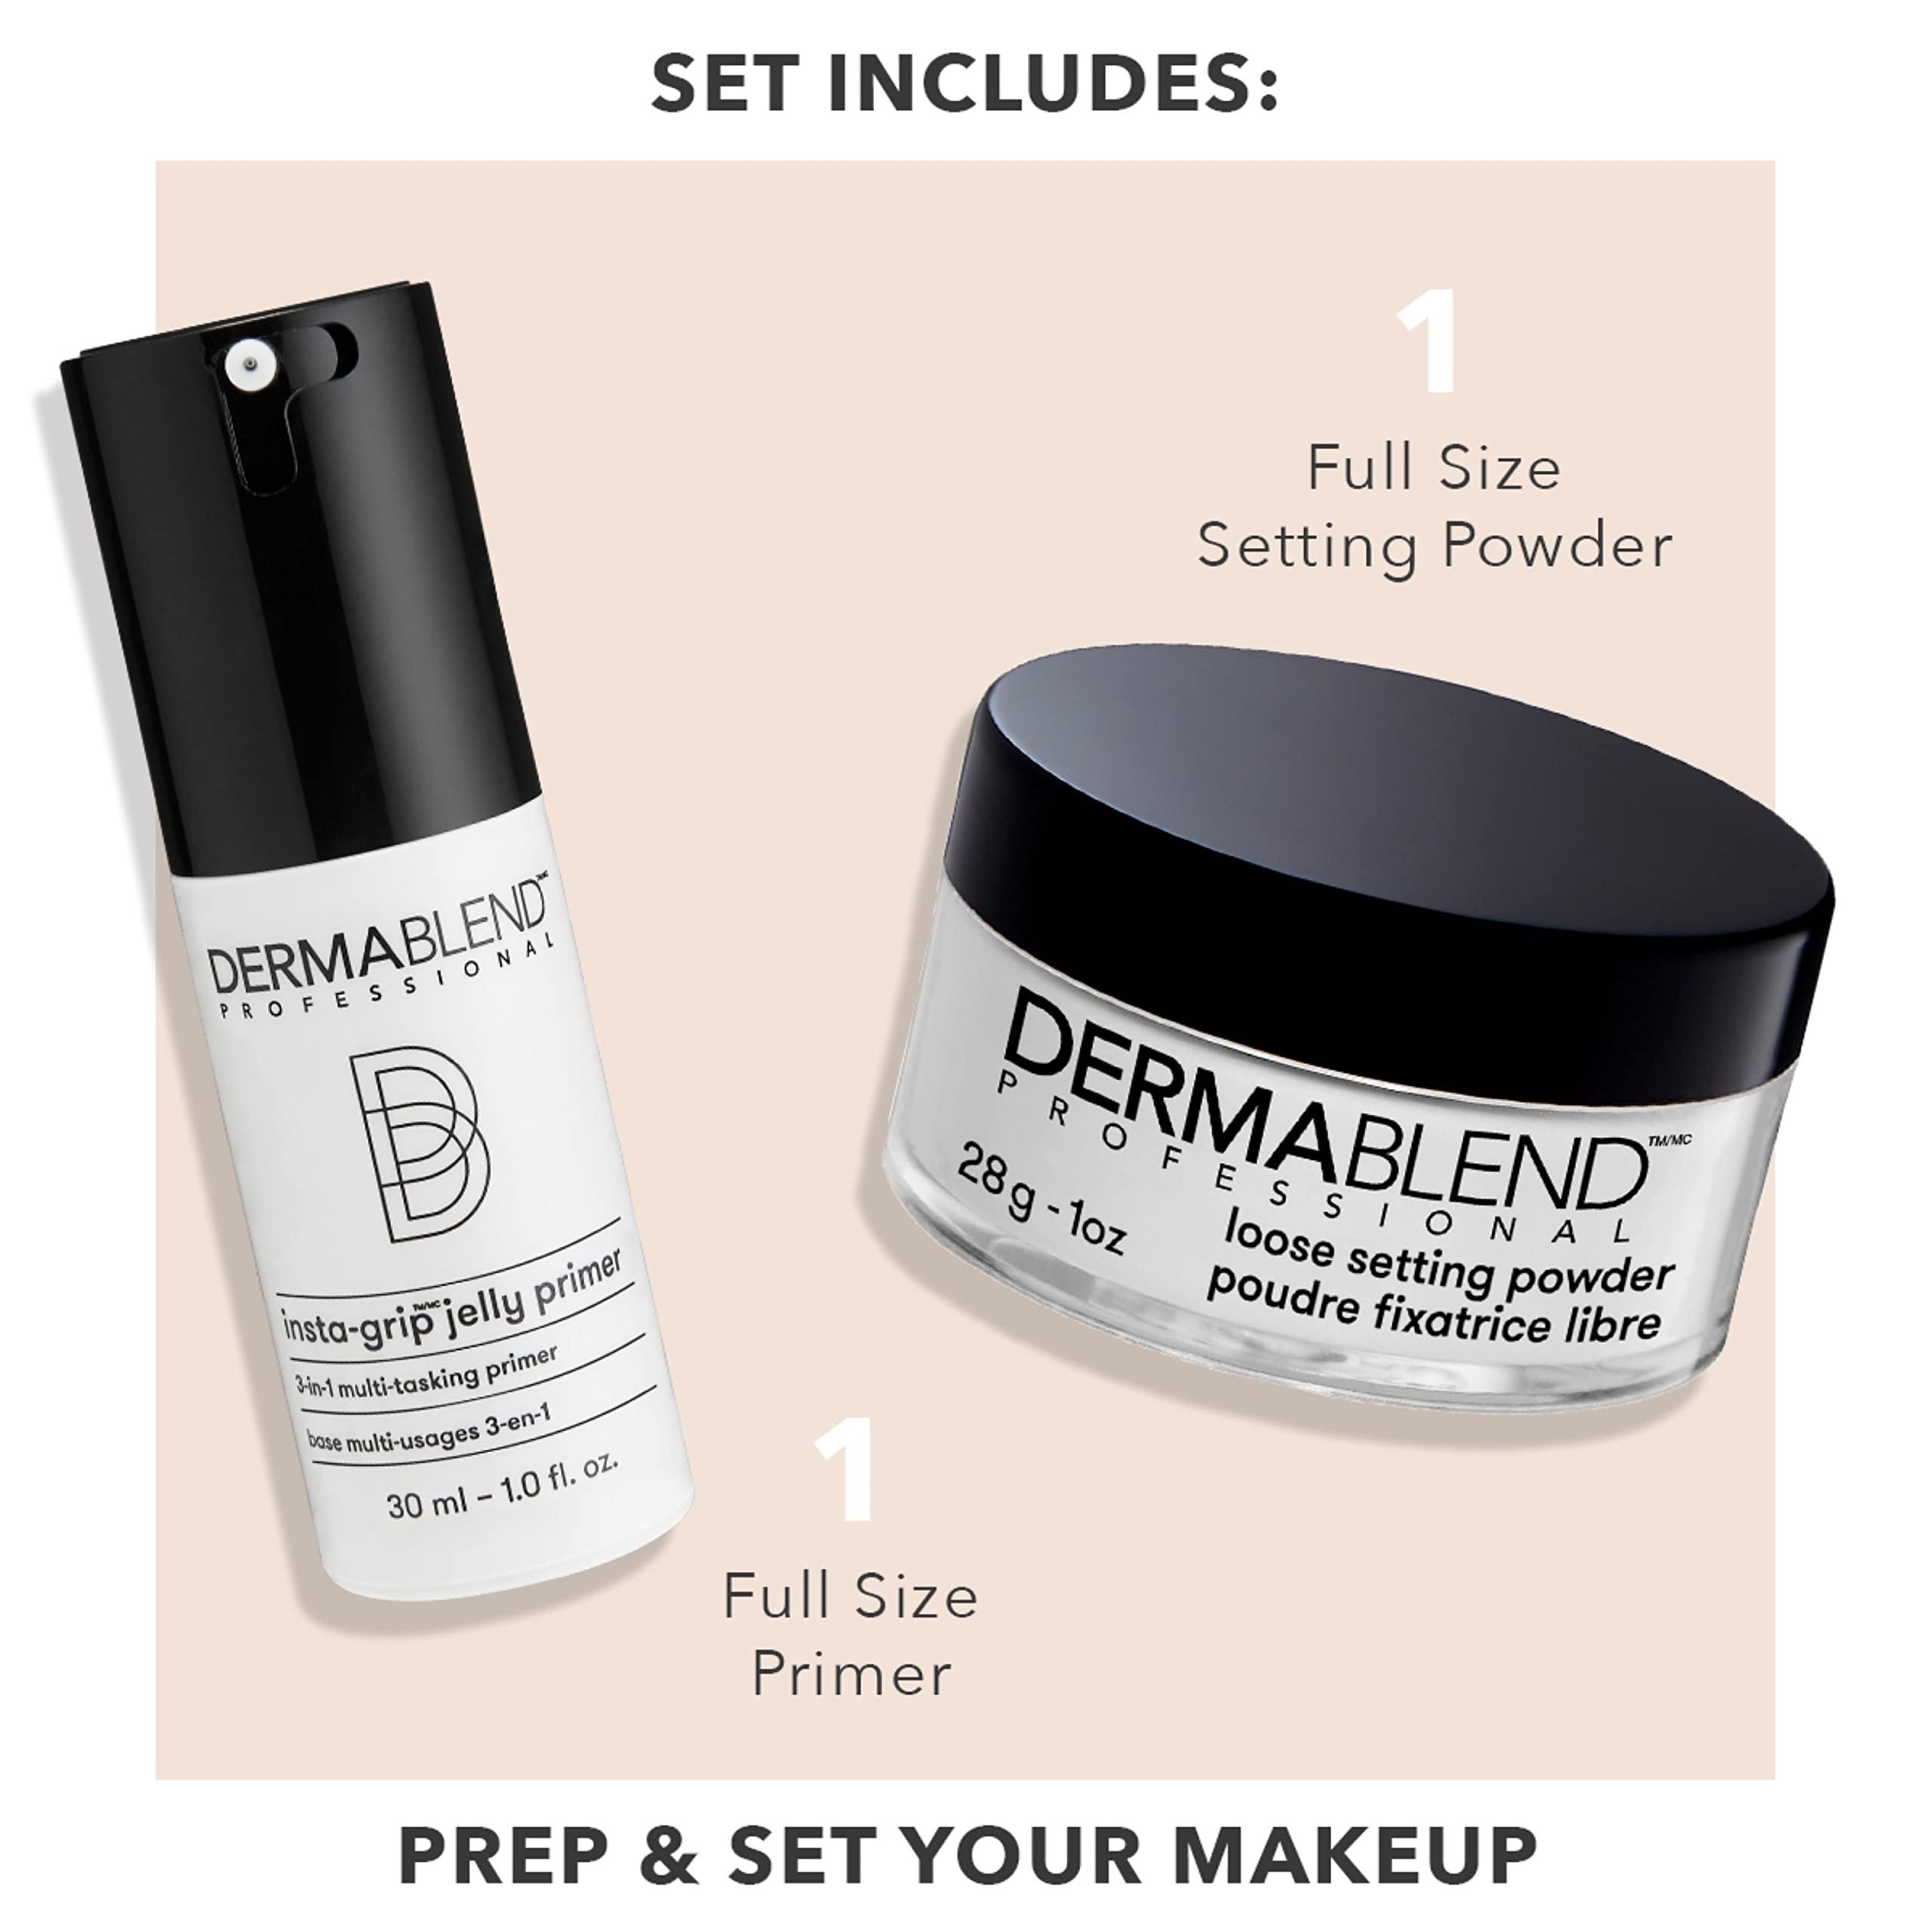 Dermablend Loose Setting Powder, Face Powder Makeup & Finishing Powder for Light, Medium & Tan Skin Tones